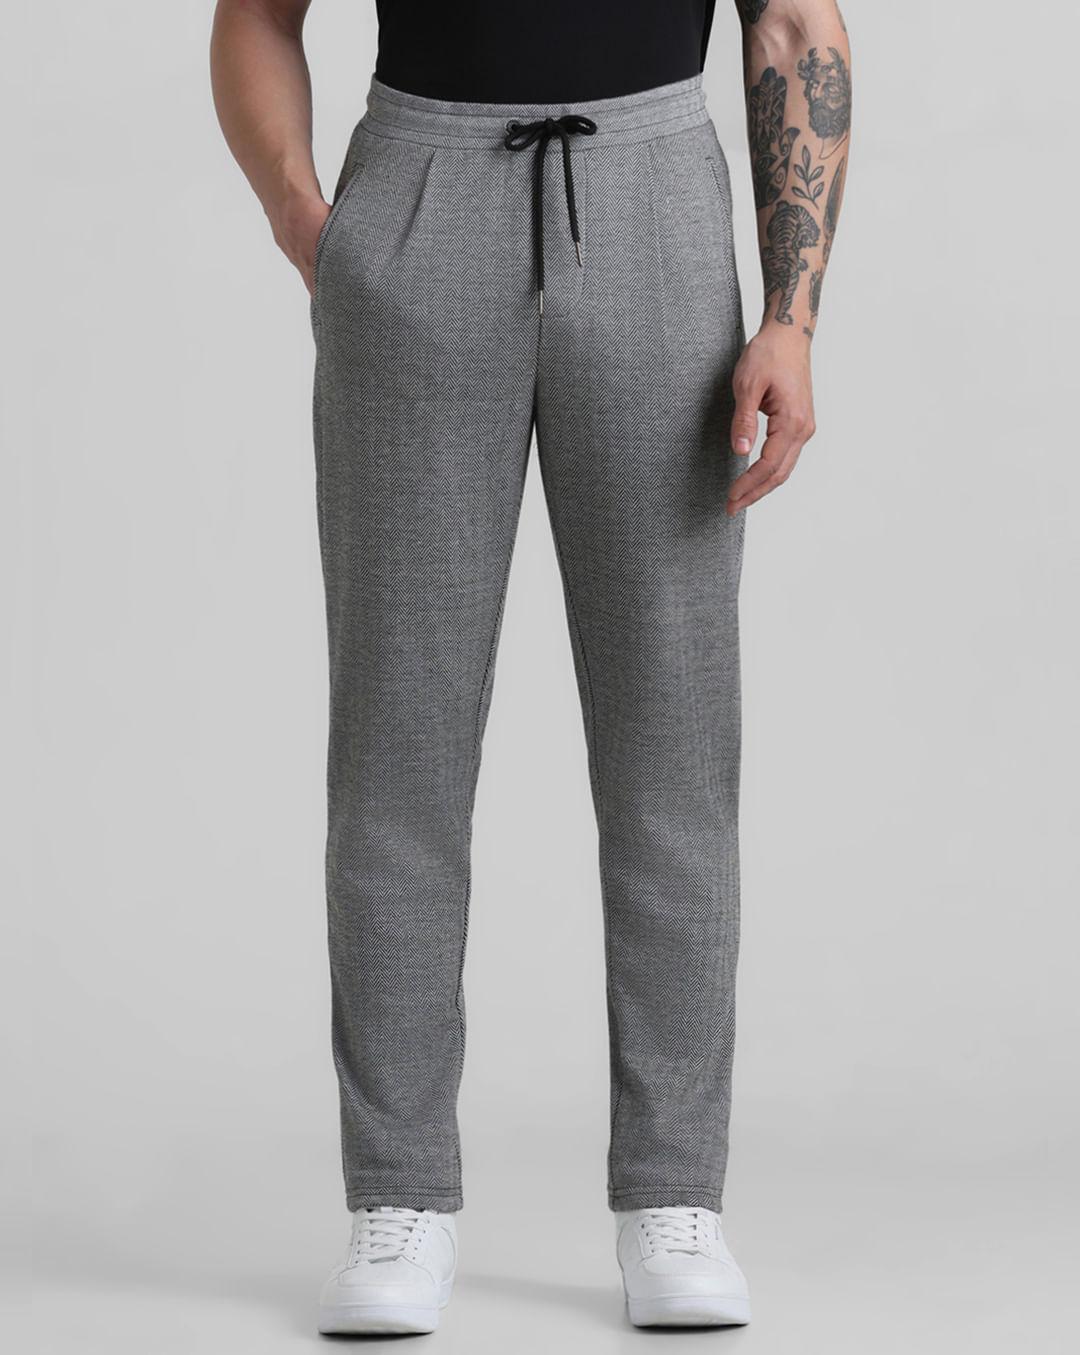 grey-mid-rise-printed-co-ord-set-pants